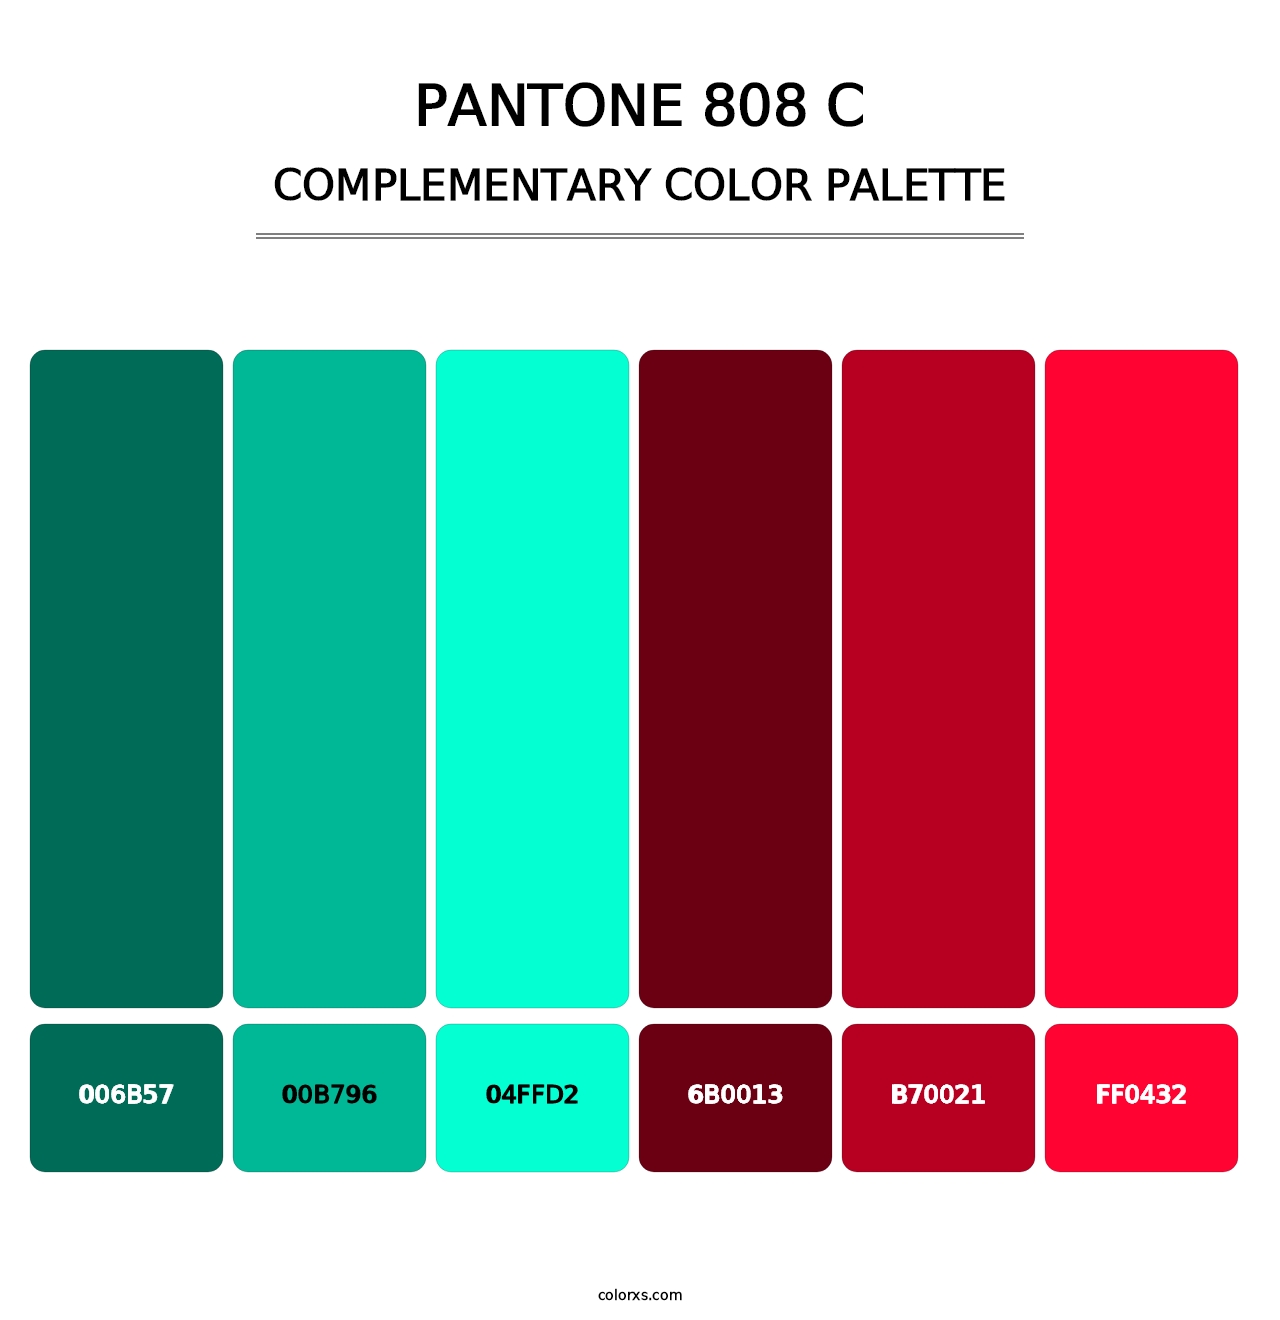 PANTONE 808 C - Complementary Color Palette